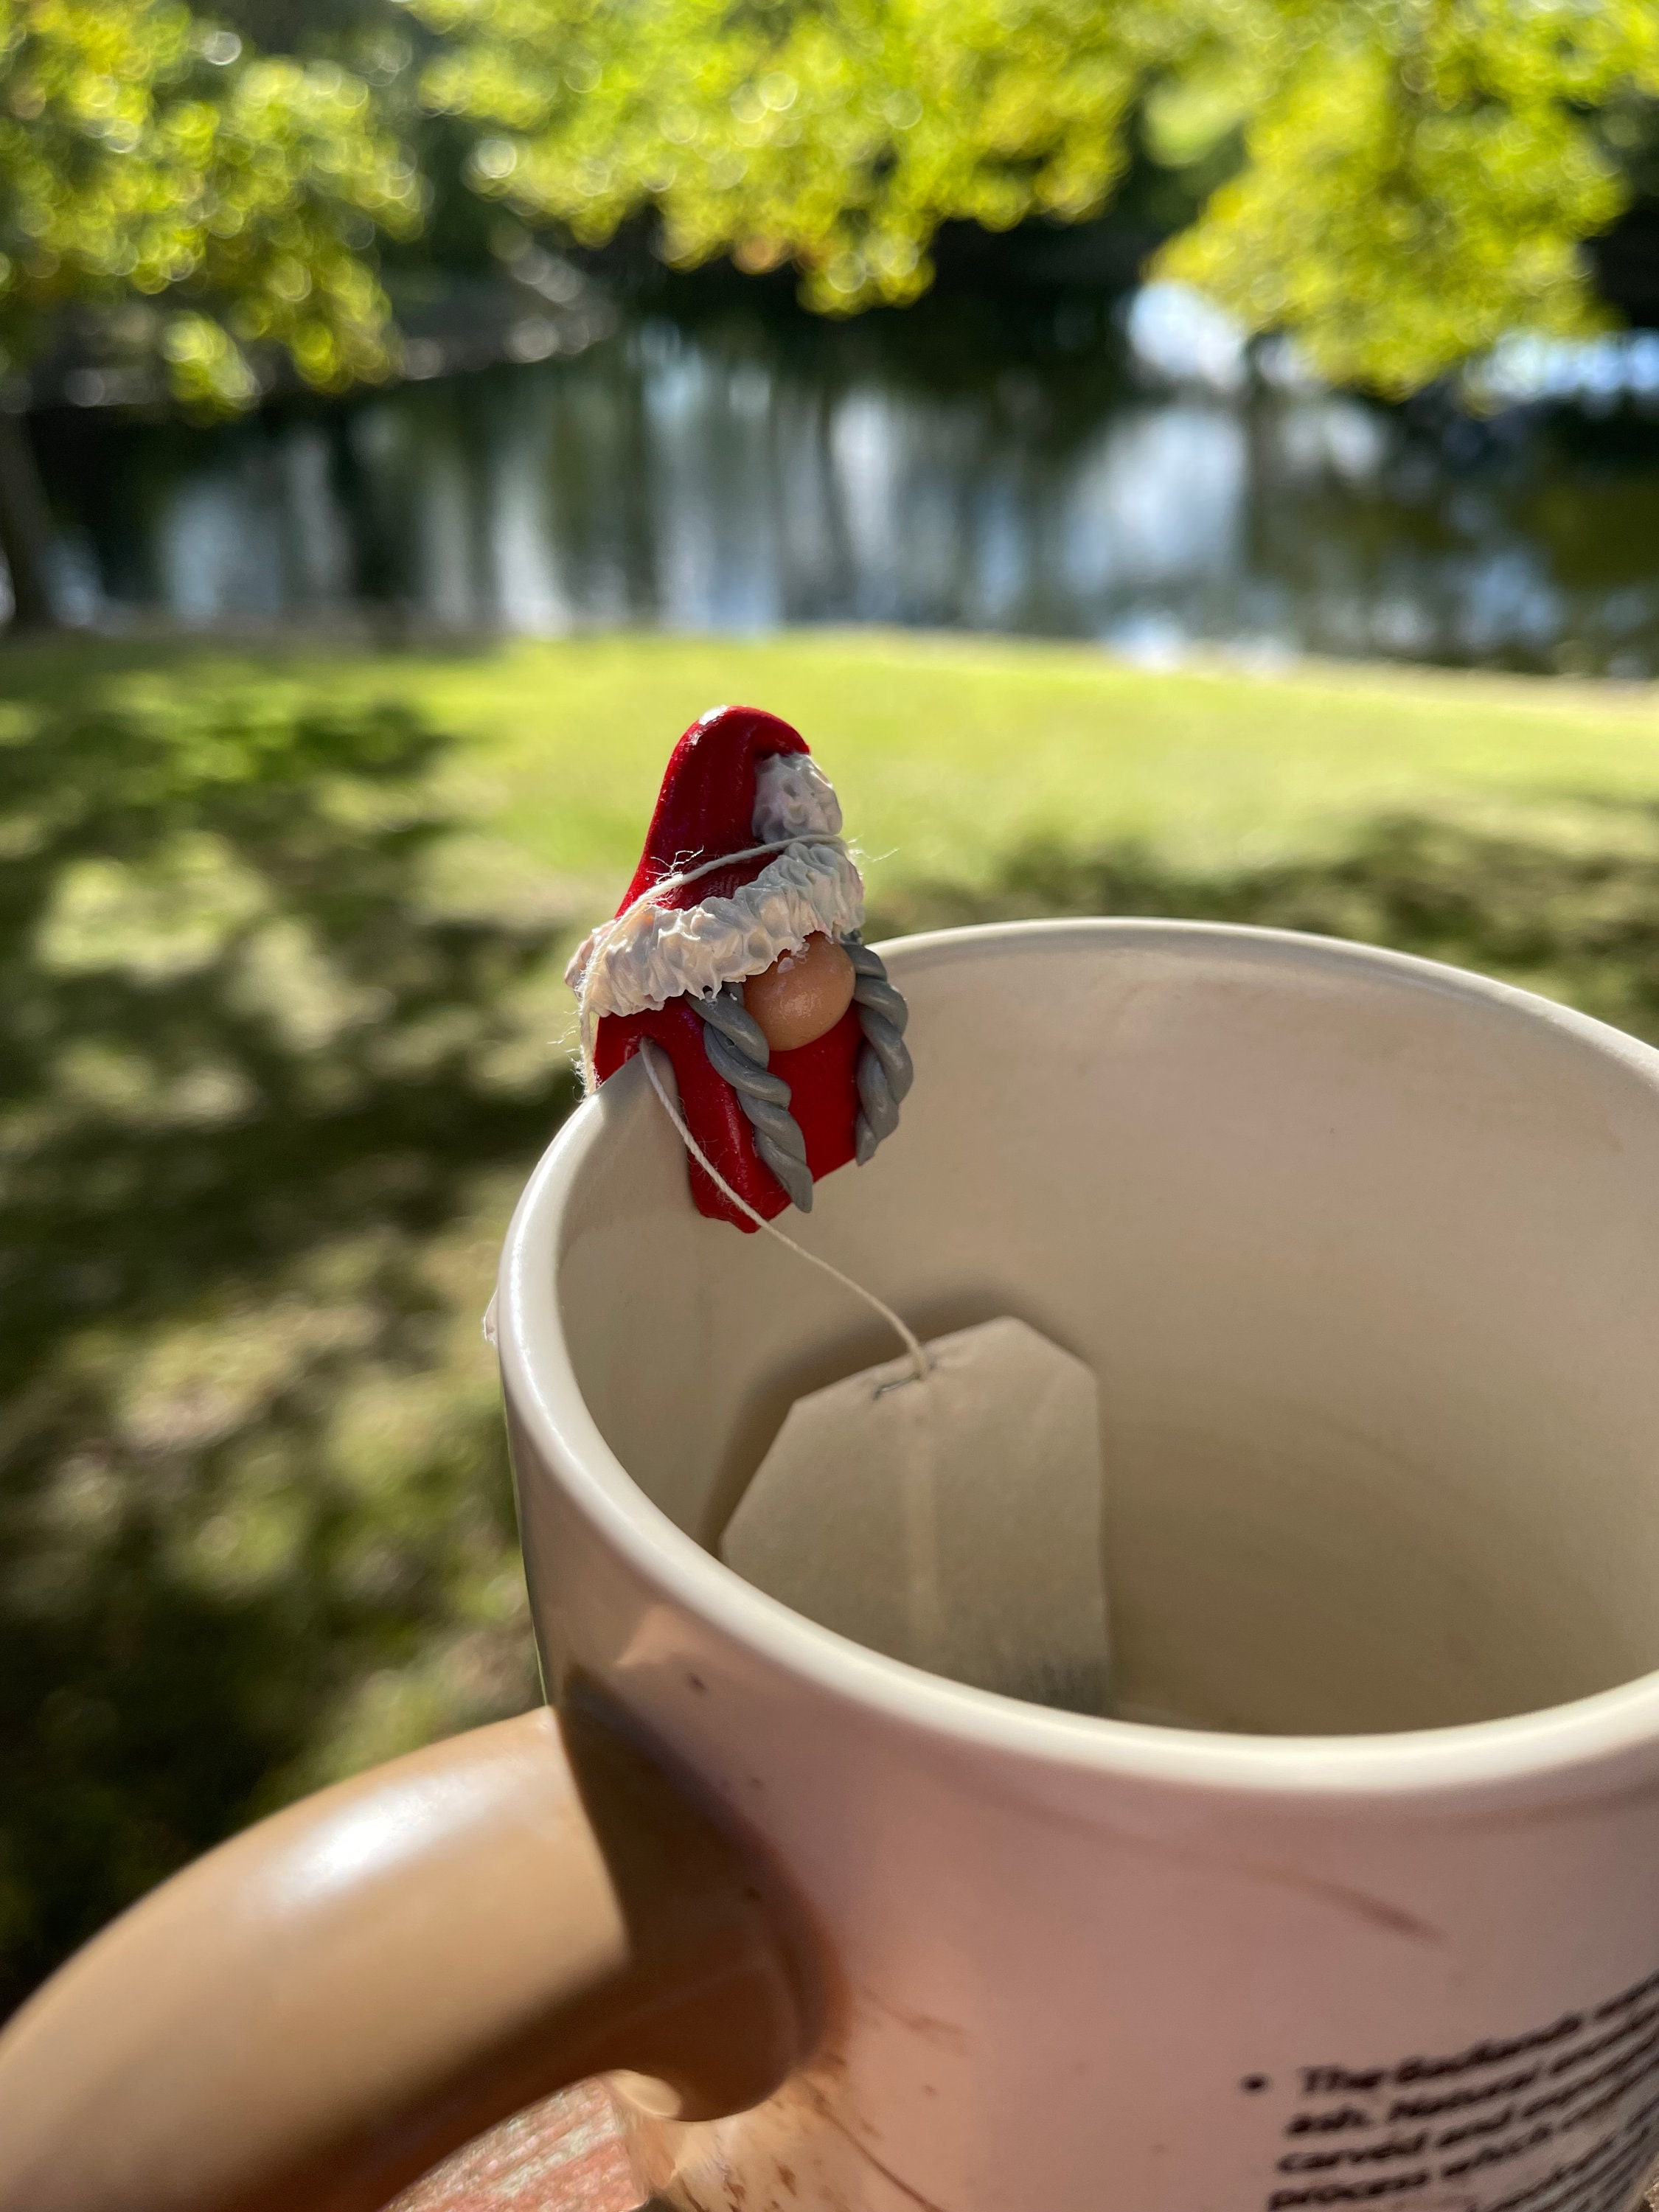 Funny & Cute Little Shark Tea Bag Holder Mug Cup Doll Tea